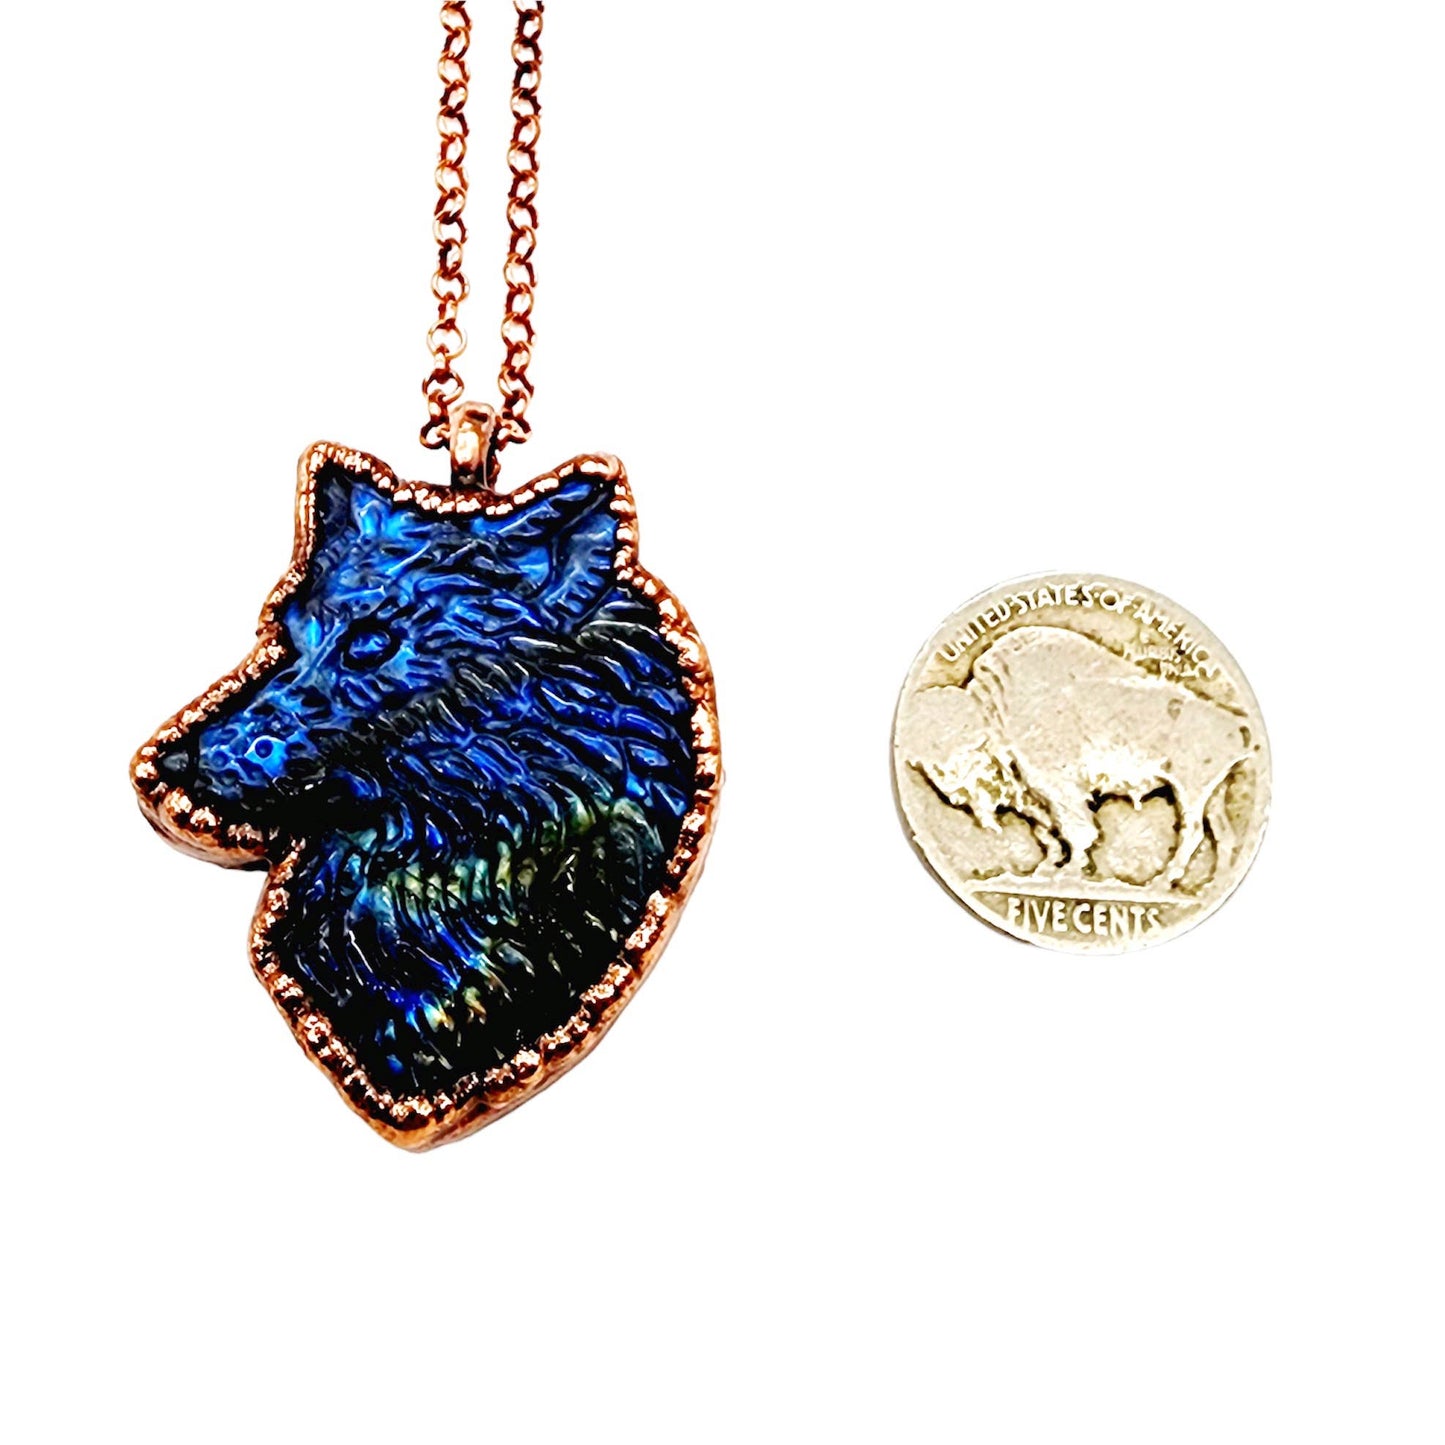 Labradorite Carved Wolf Necklace